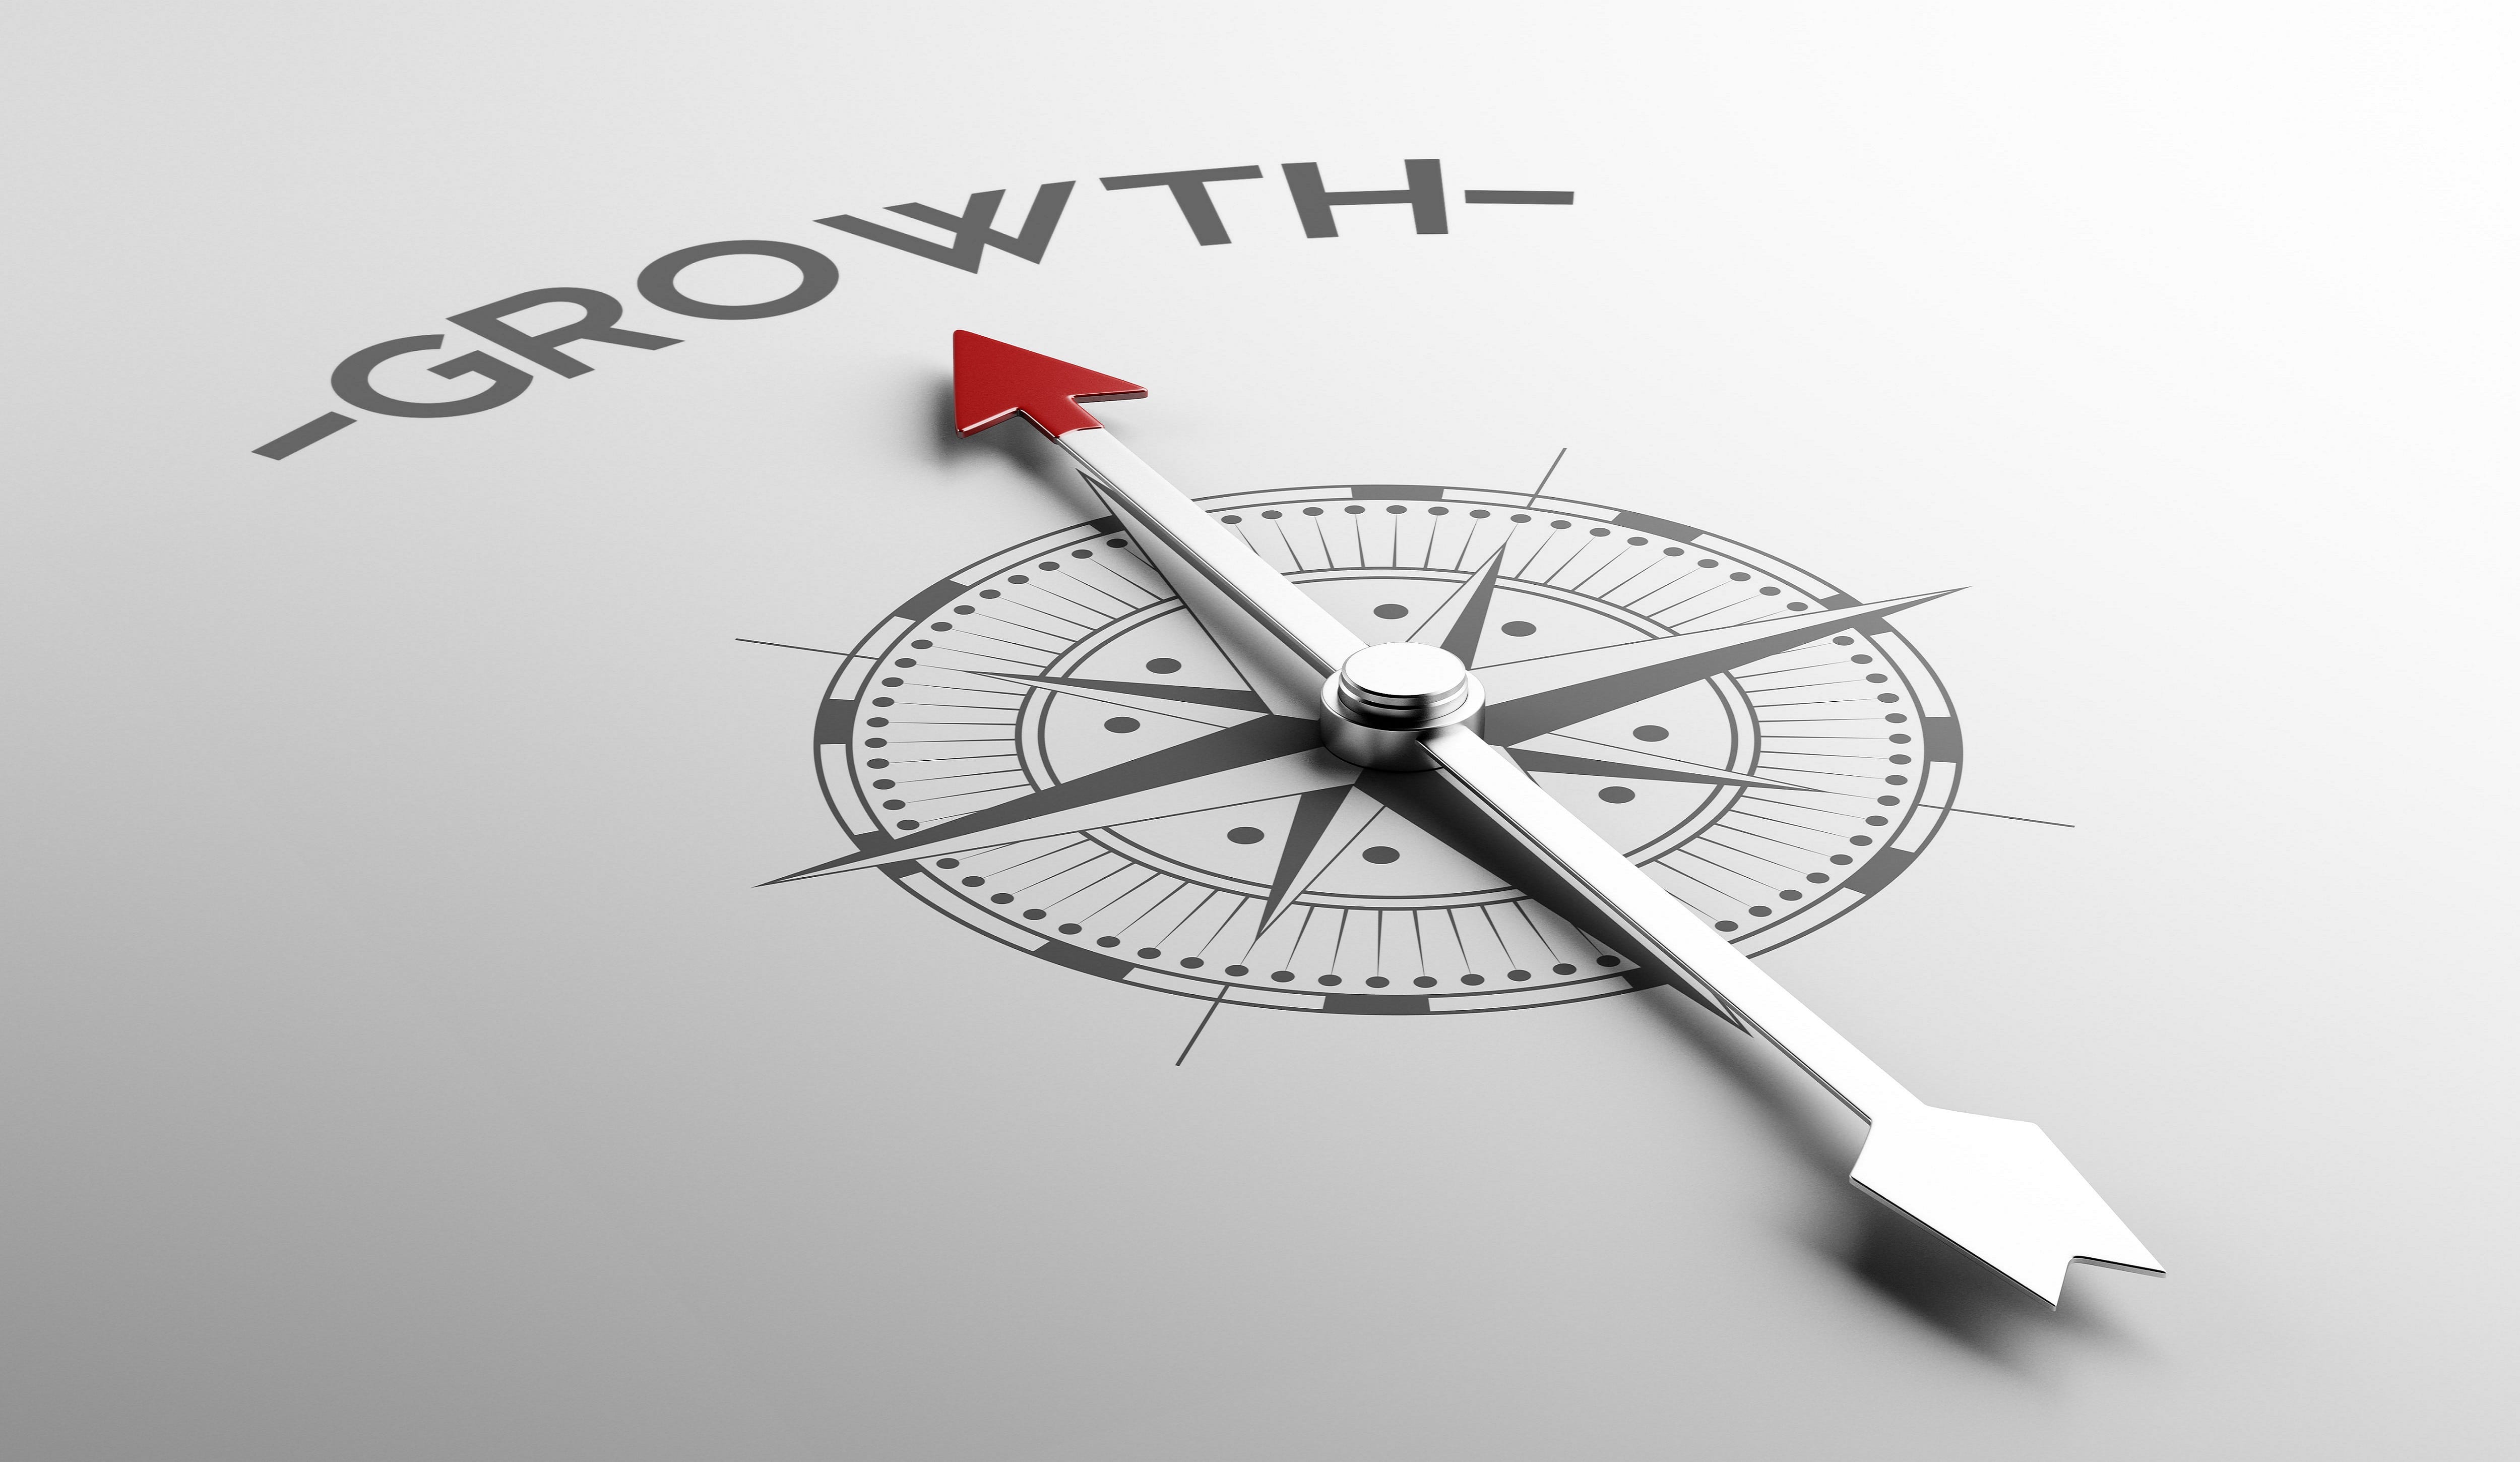 Blogpost Titelbild: a route to growth